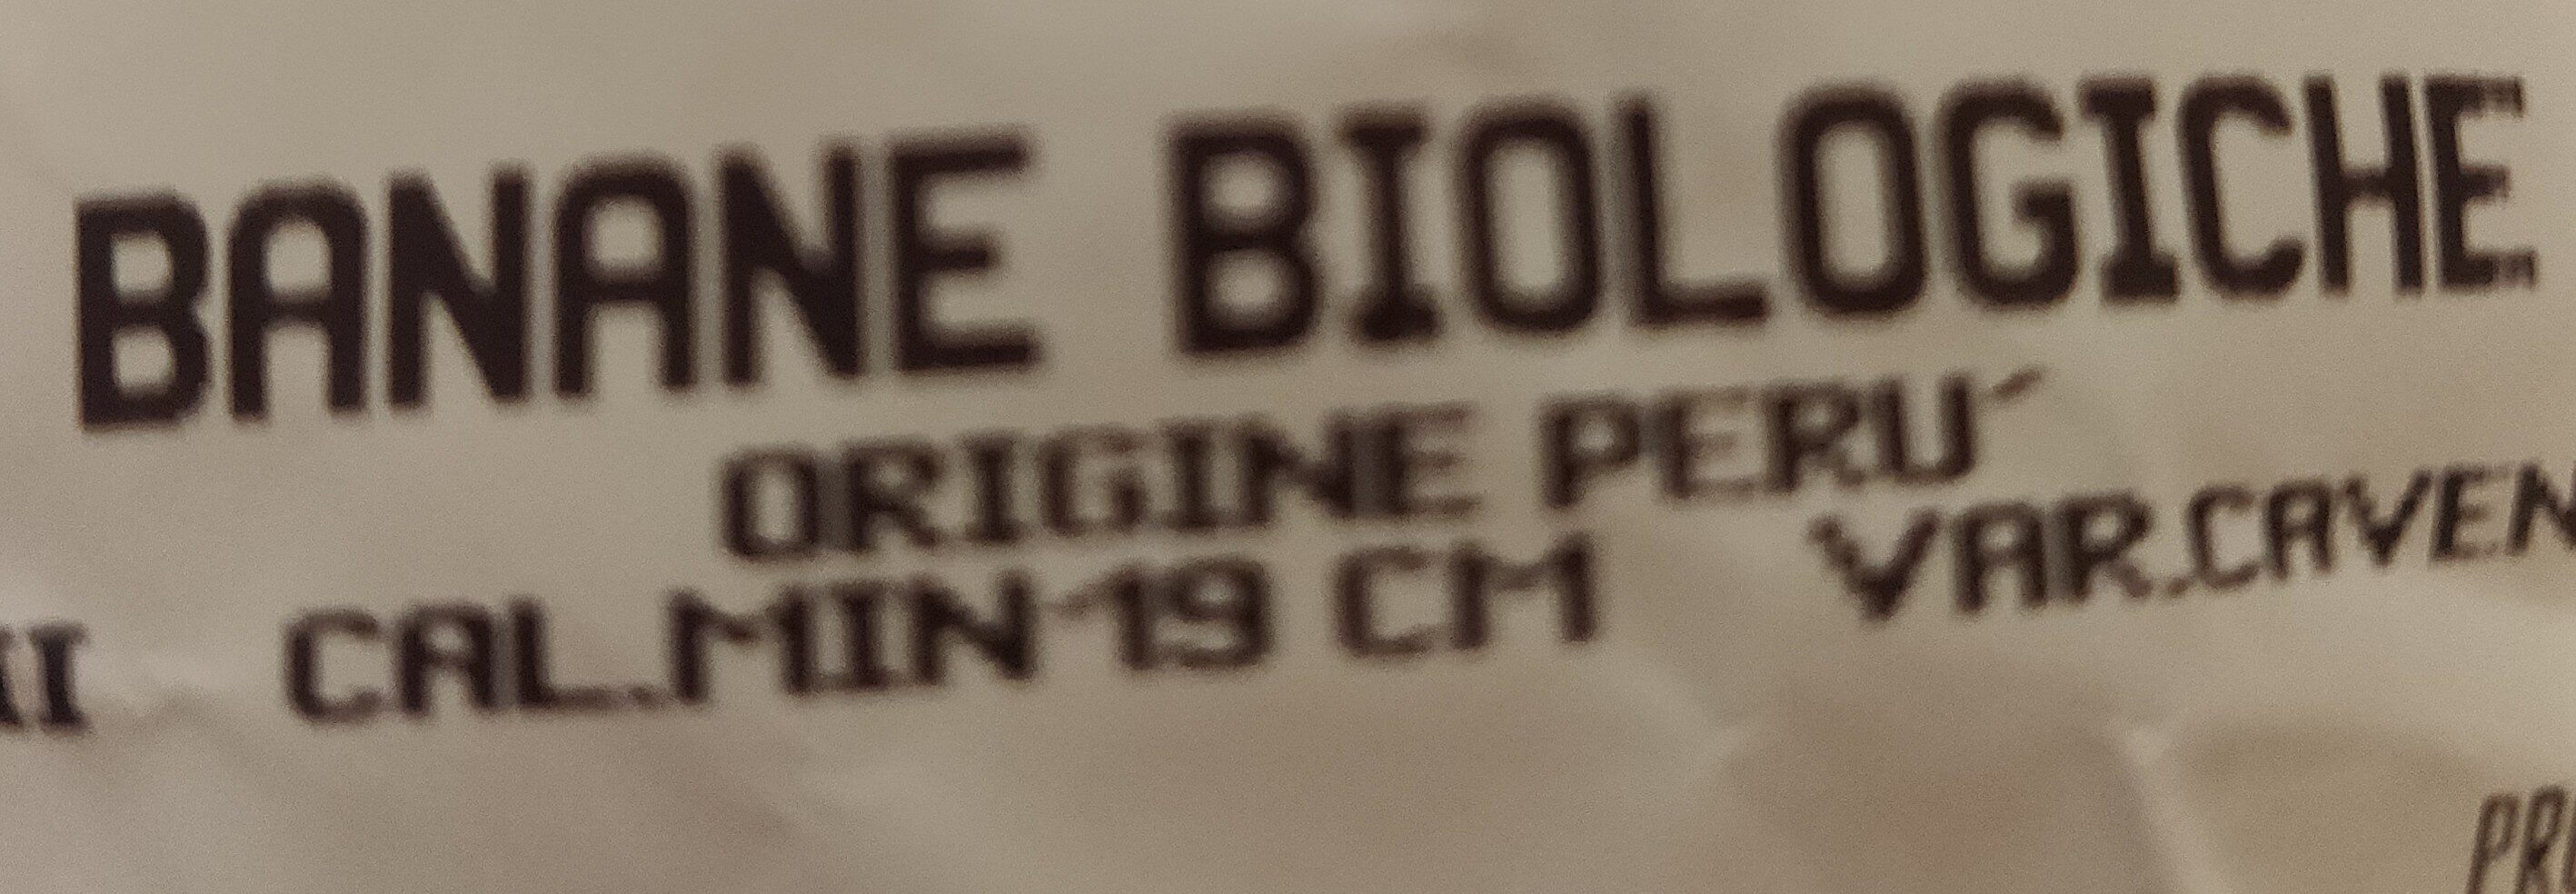 banane biologiche - Ingredients - it